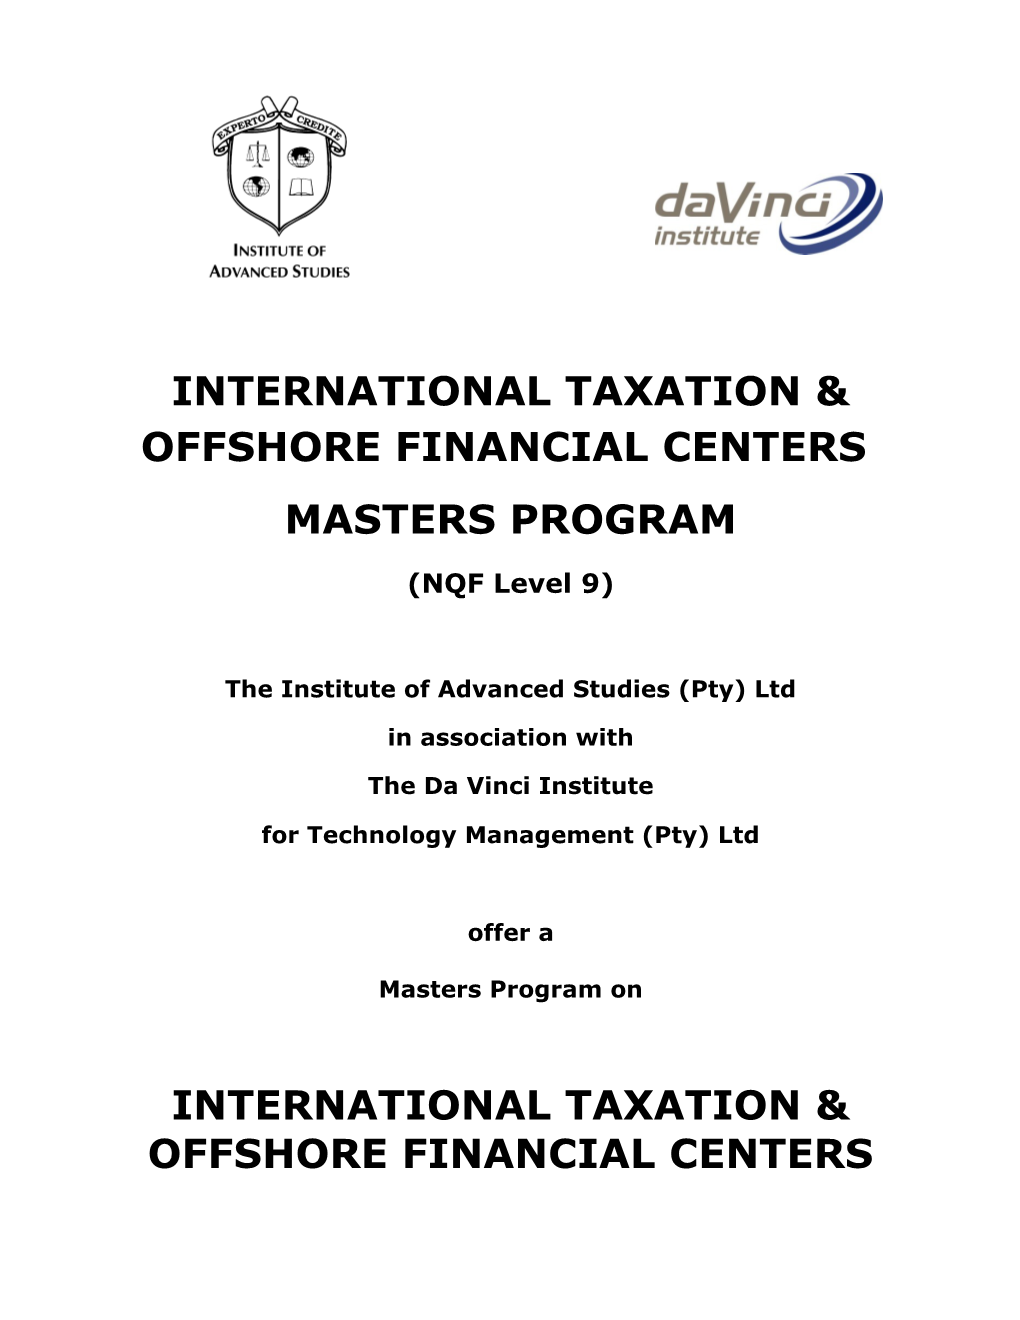 International Taxation Offshore Financial Centers